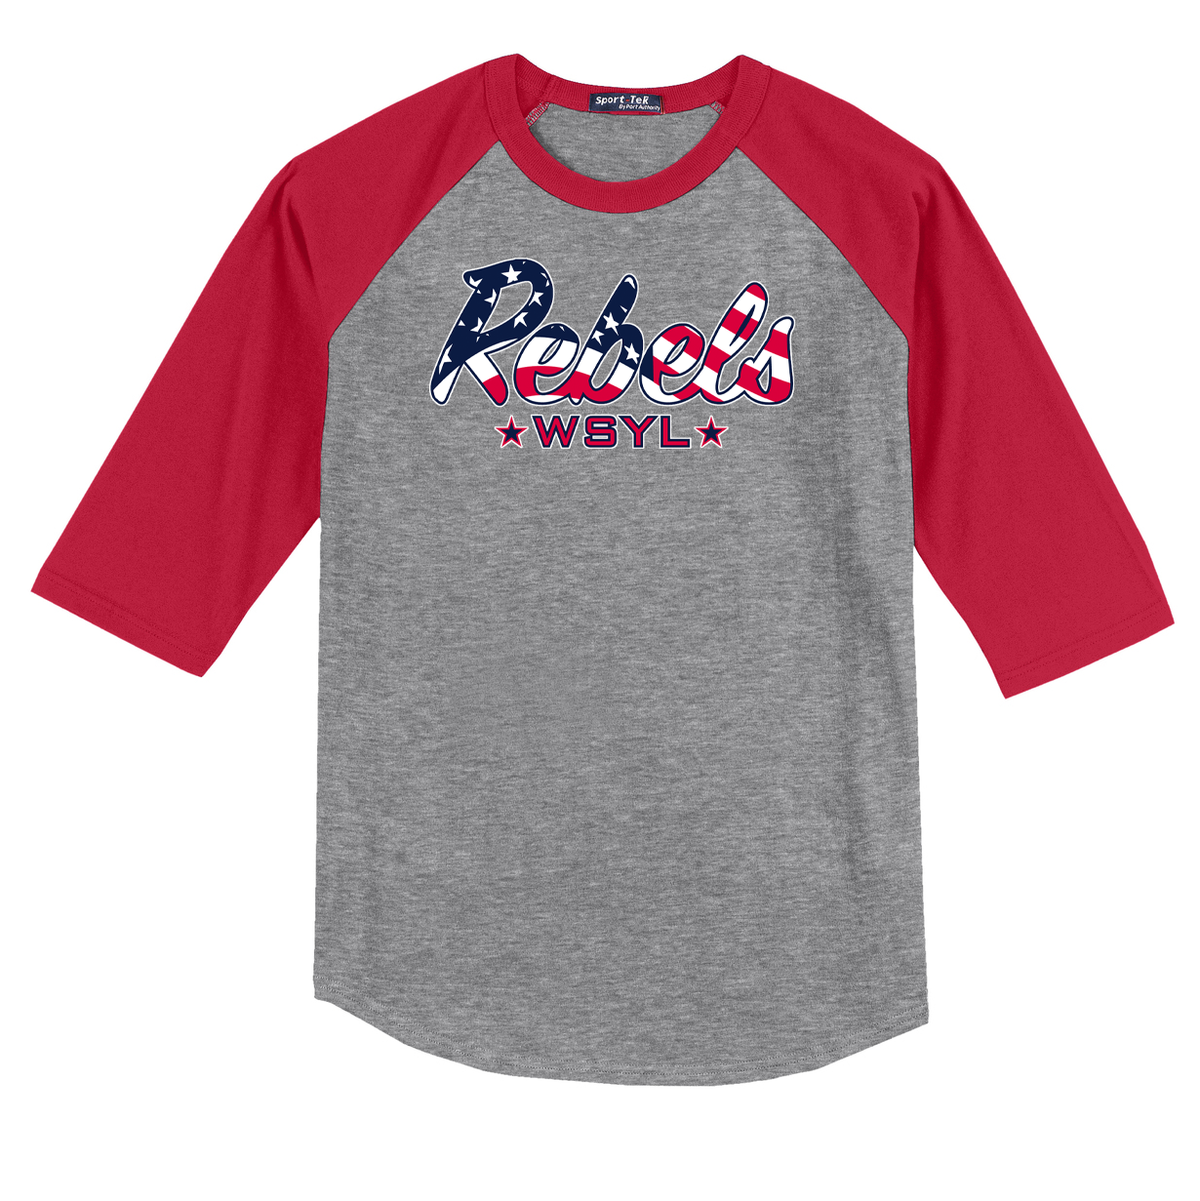 Rebels World Series Youth League 3/4 Sleeve Baseball Shirt